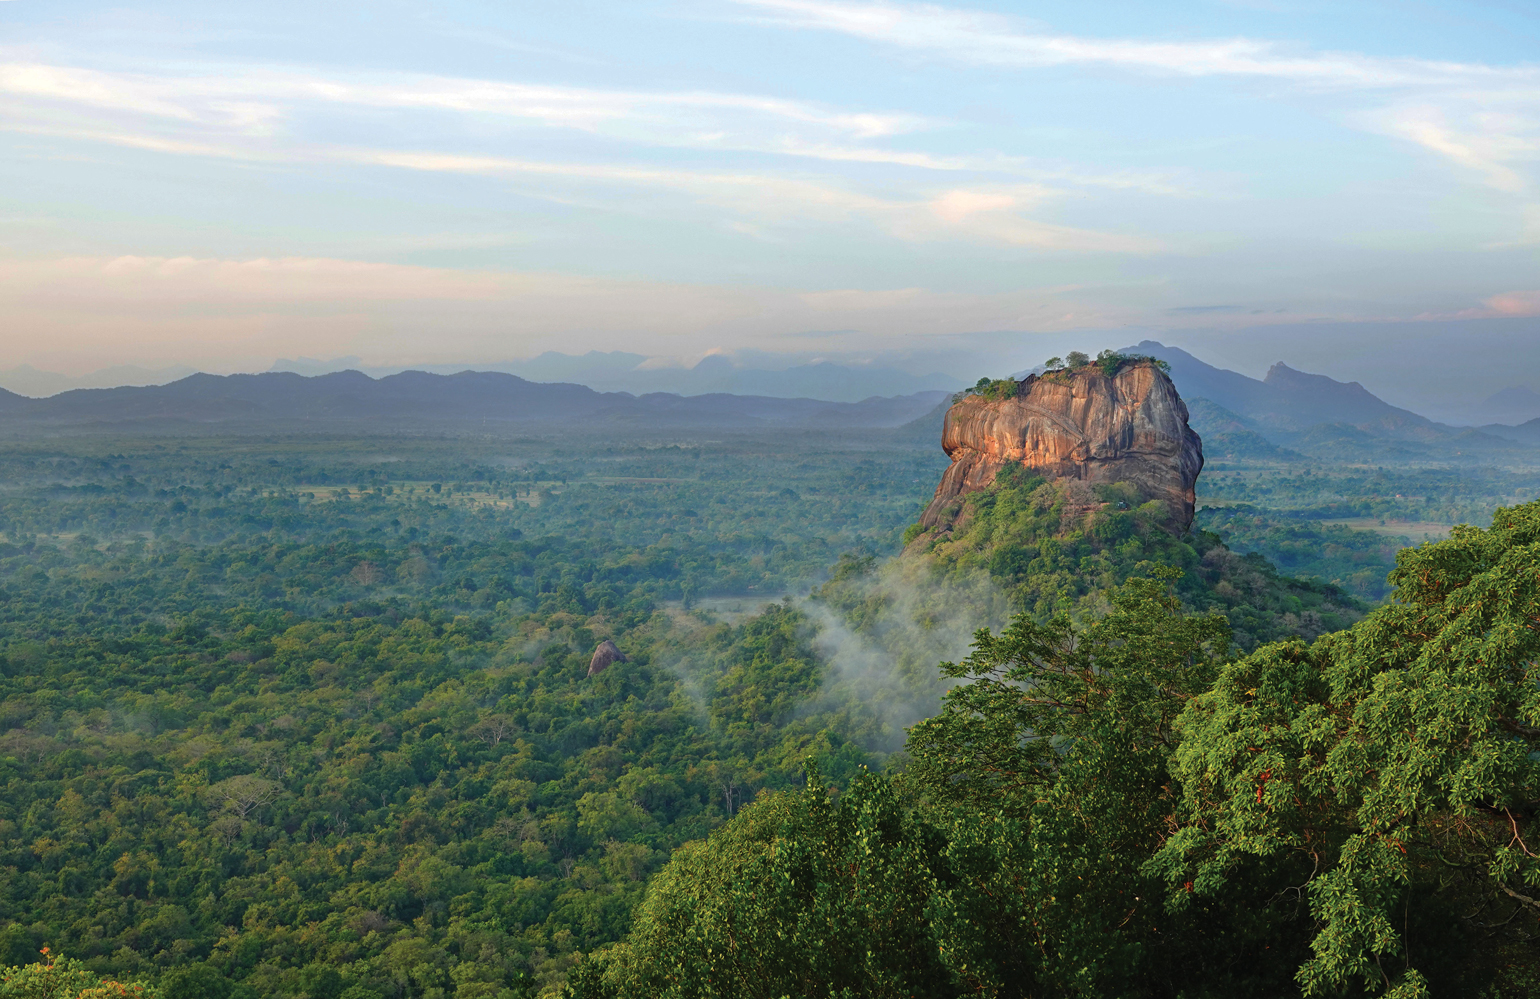 Travel Bucket List: Find Adventure in Sri Lanka